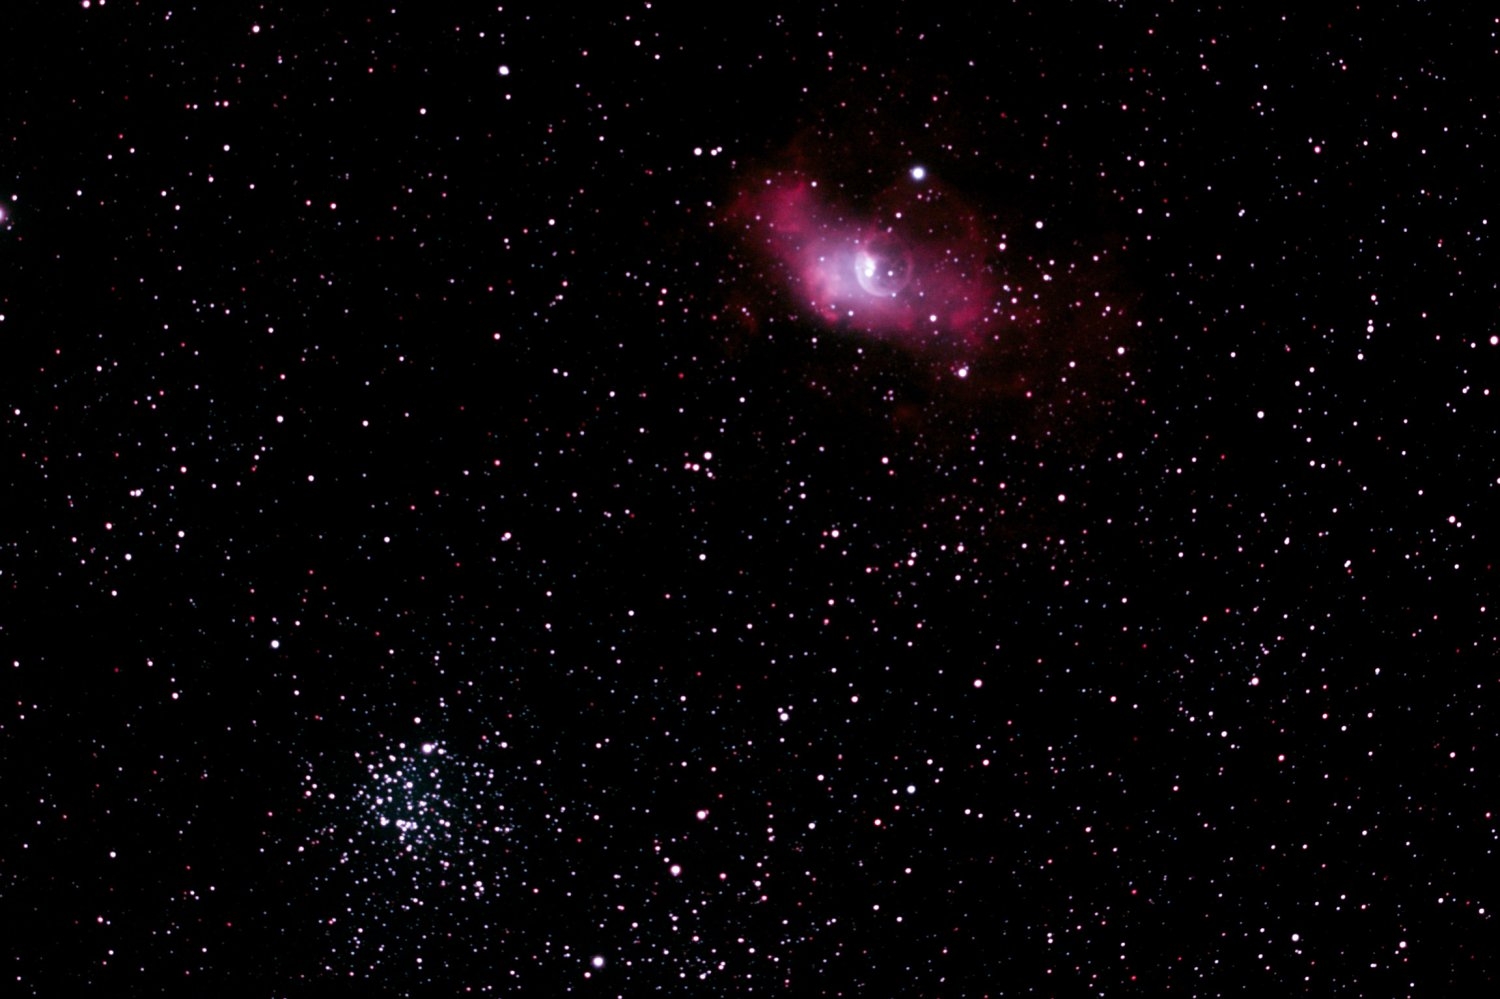 Bubble Nebula-2 copy-cropped.jpg